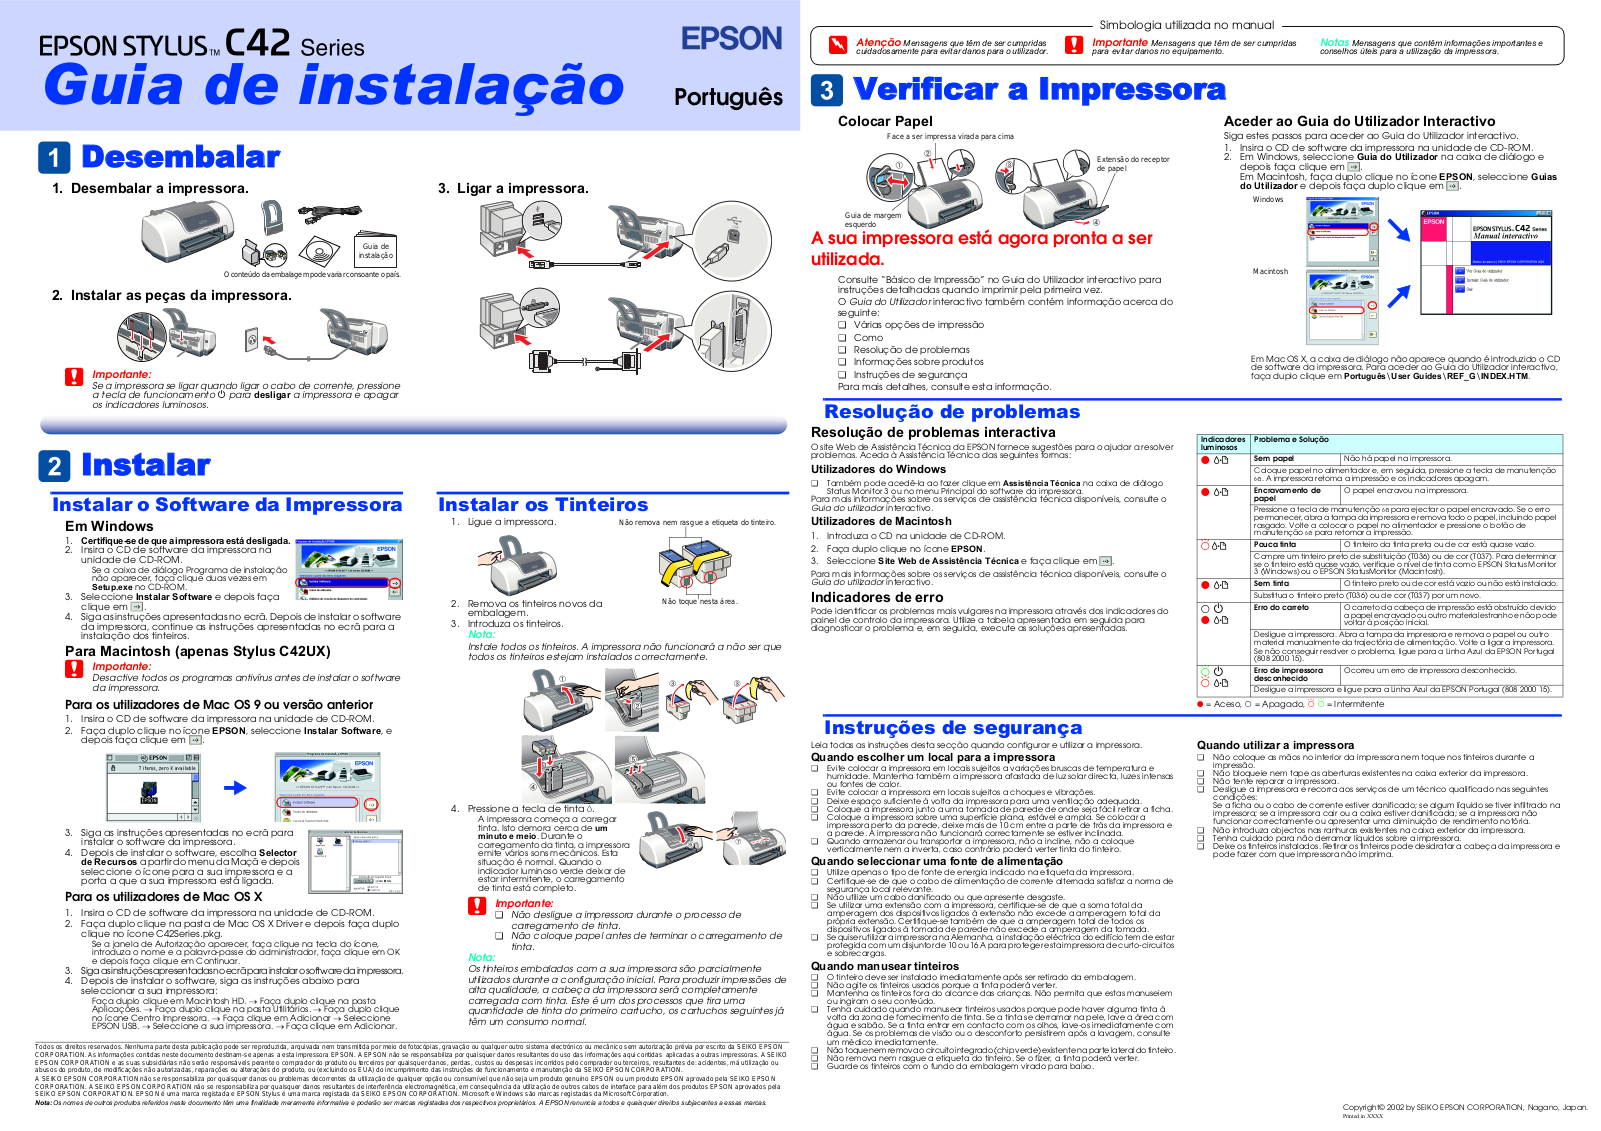 Epson STYLUS C42 series Installation Manual